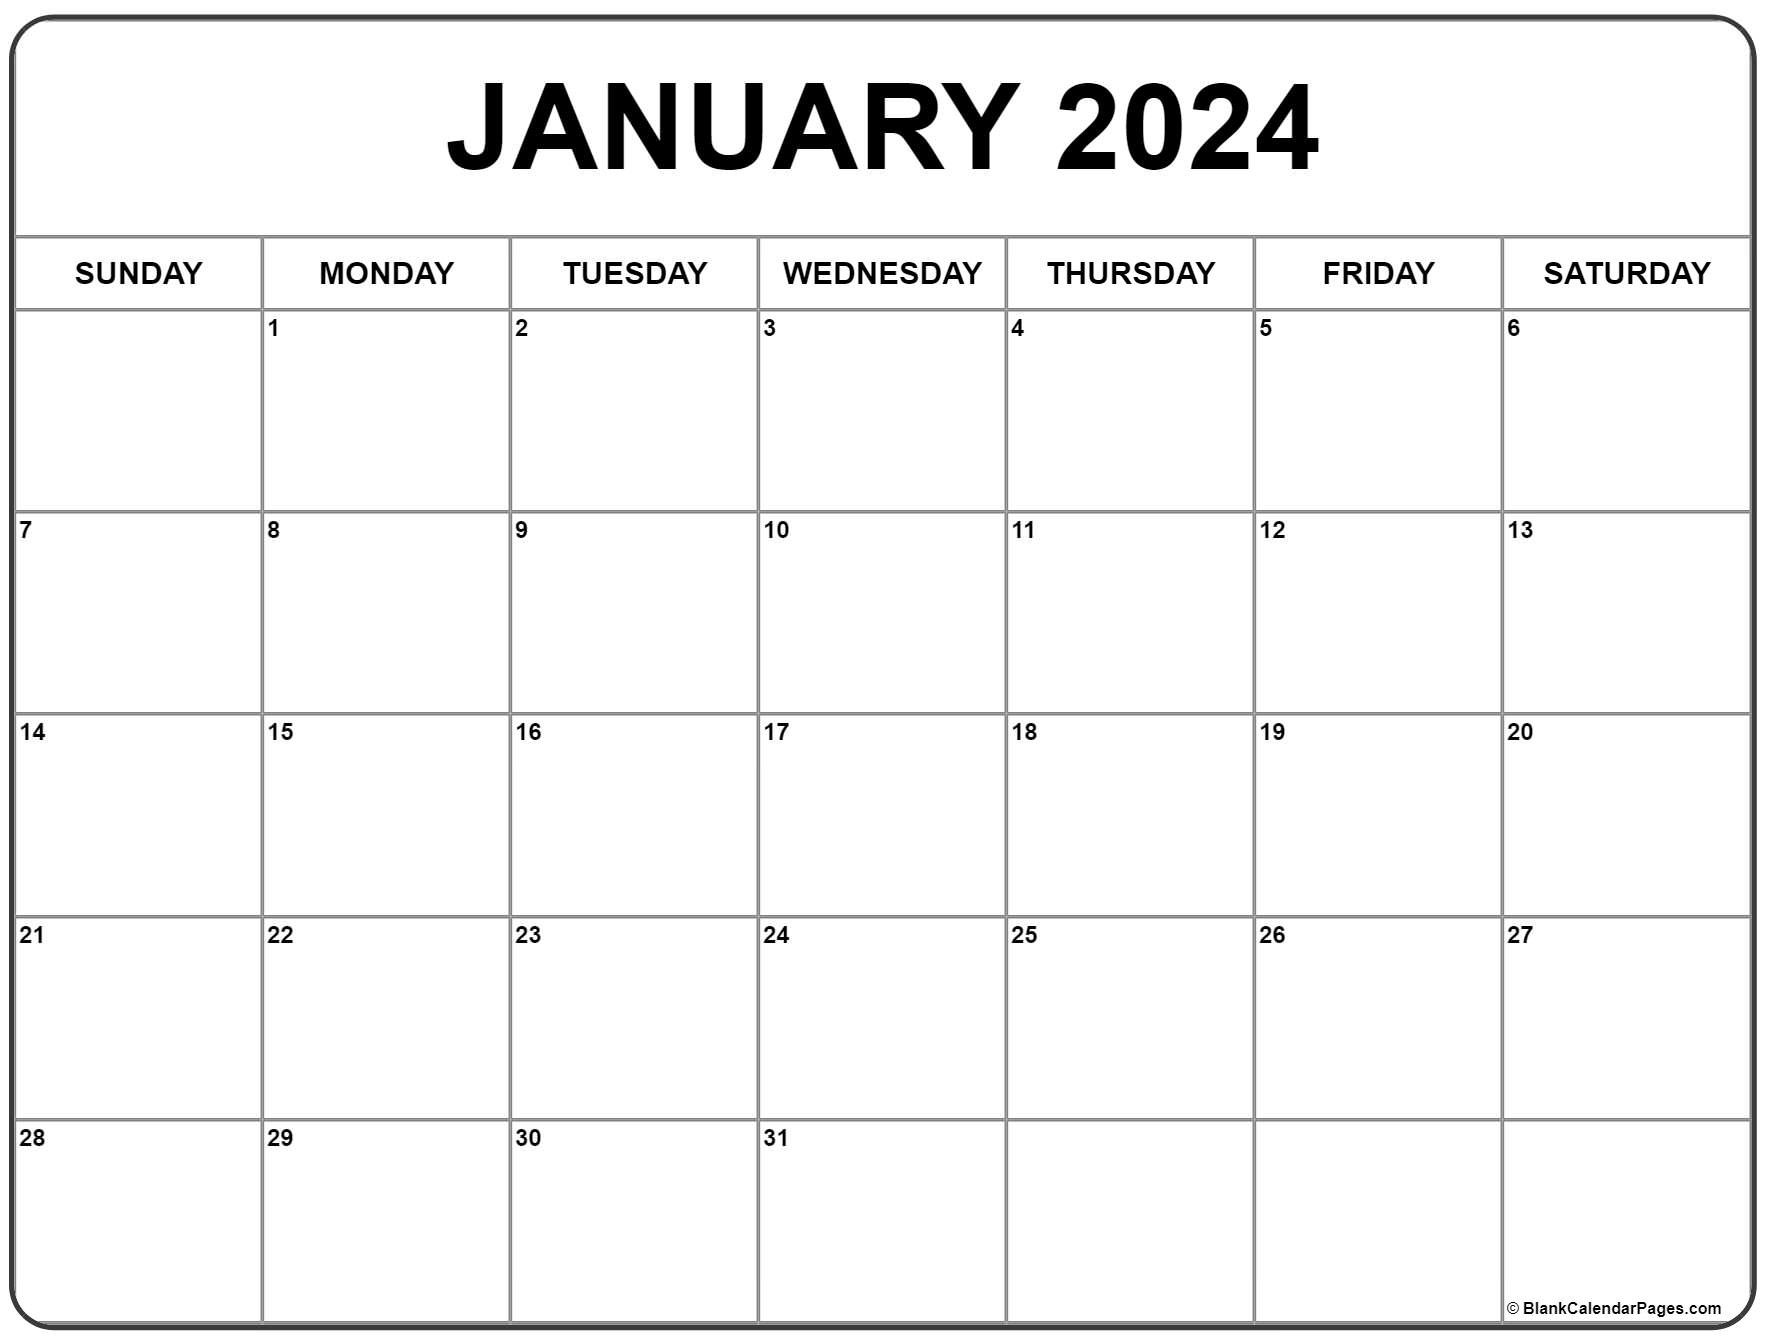 January 2024 Calendars That Work Gambaran